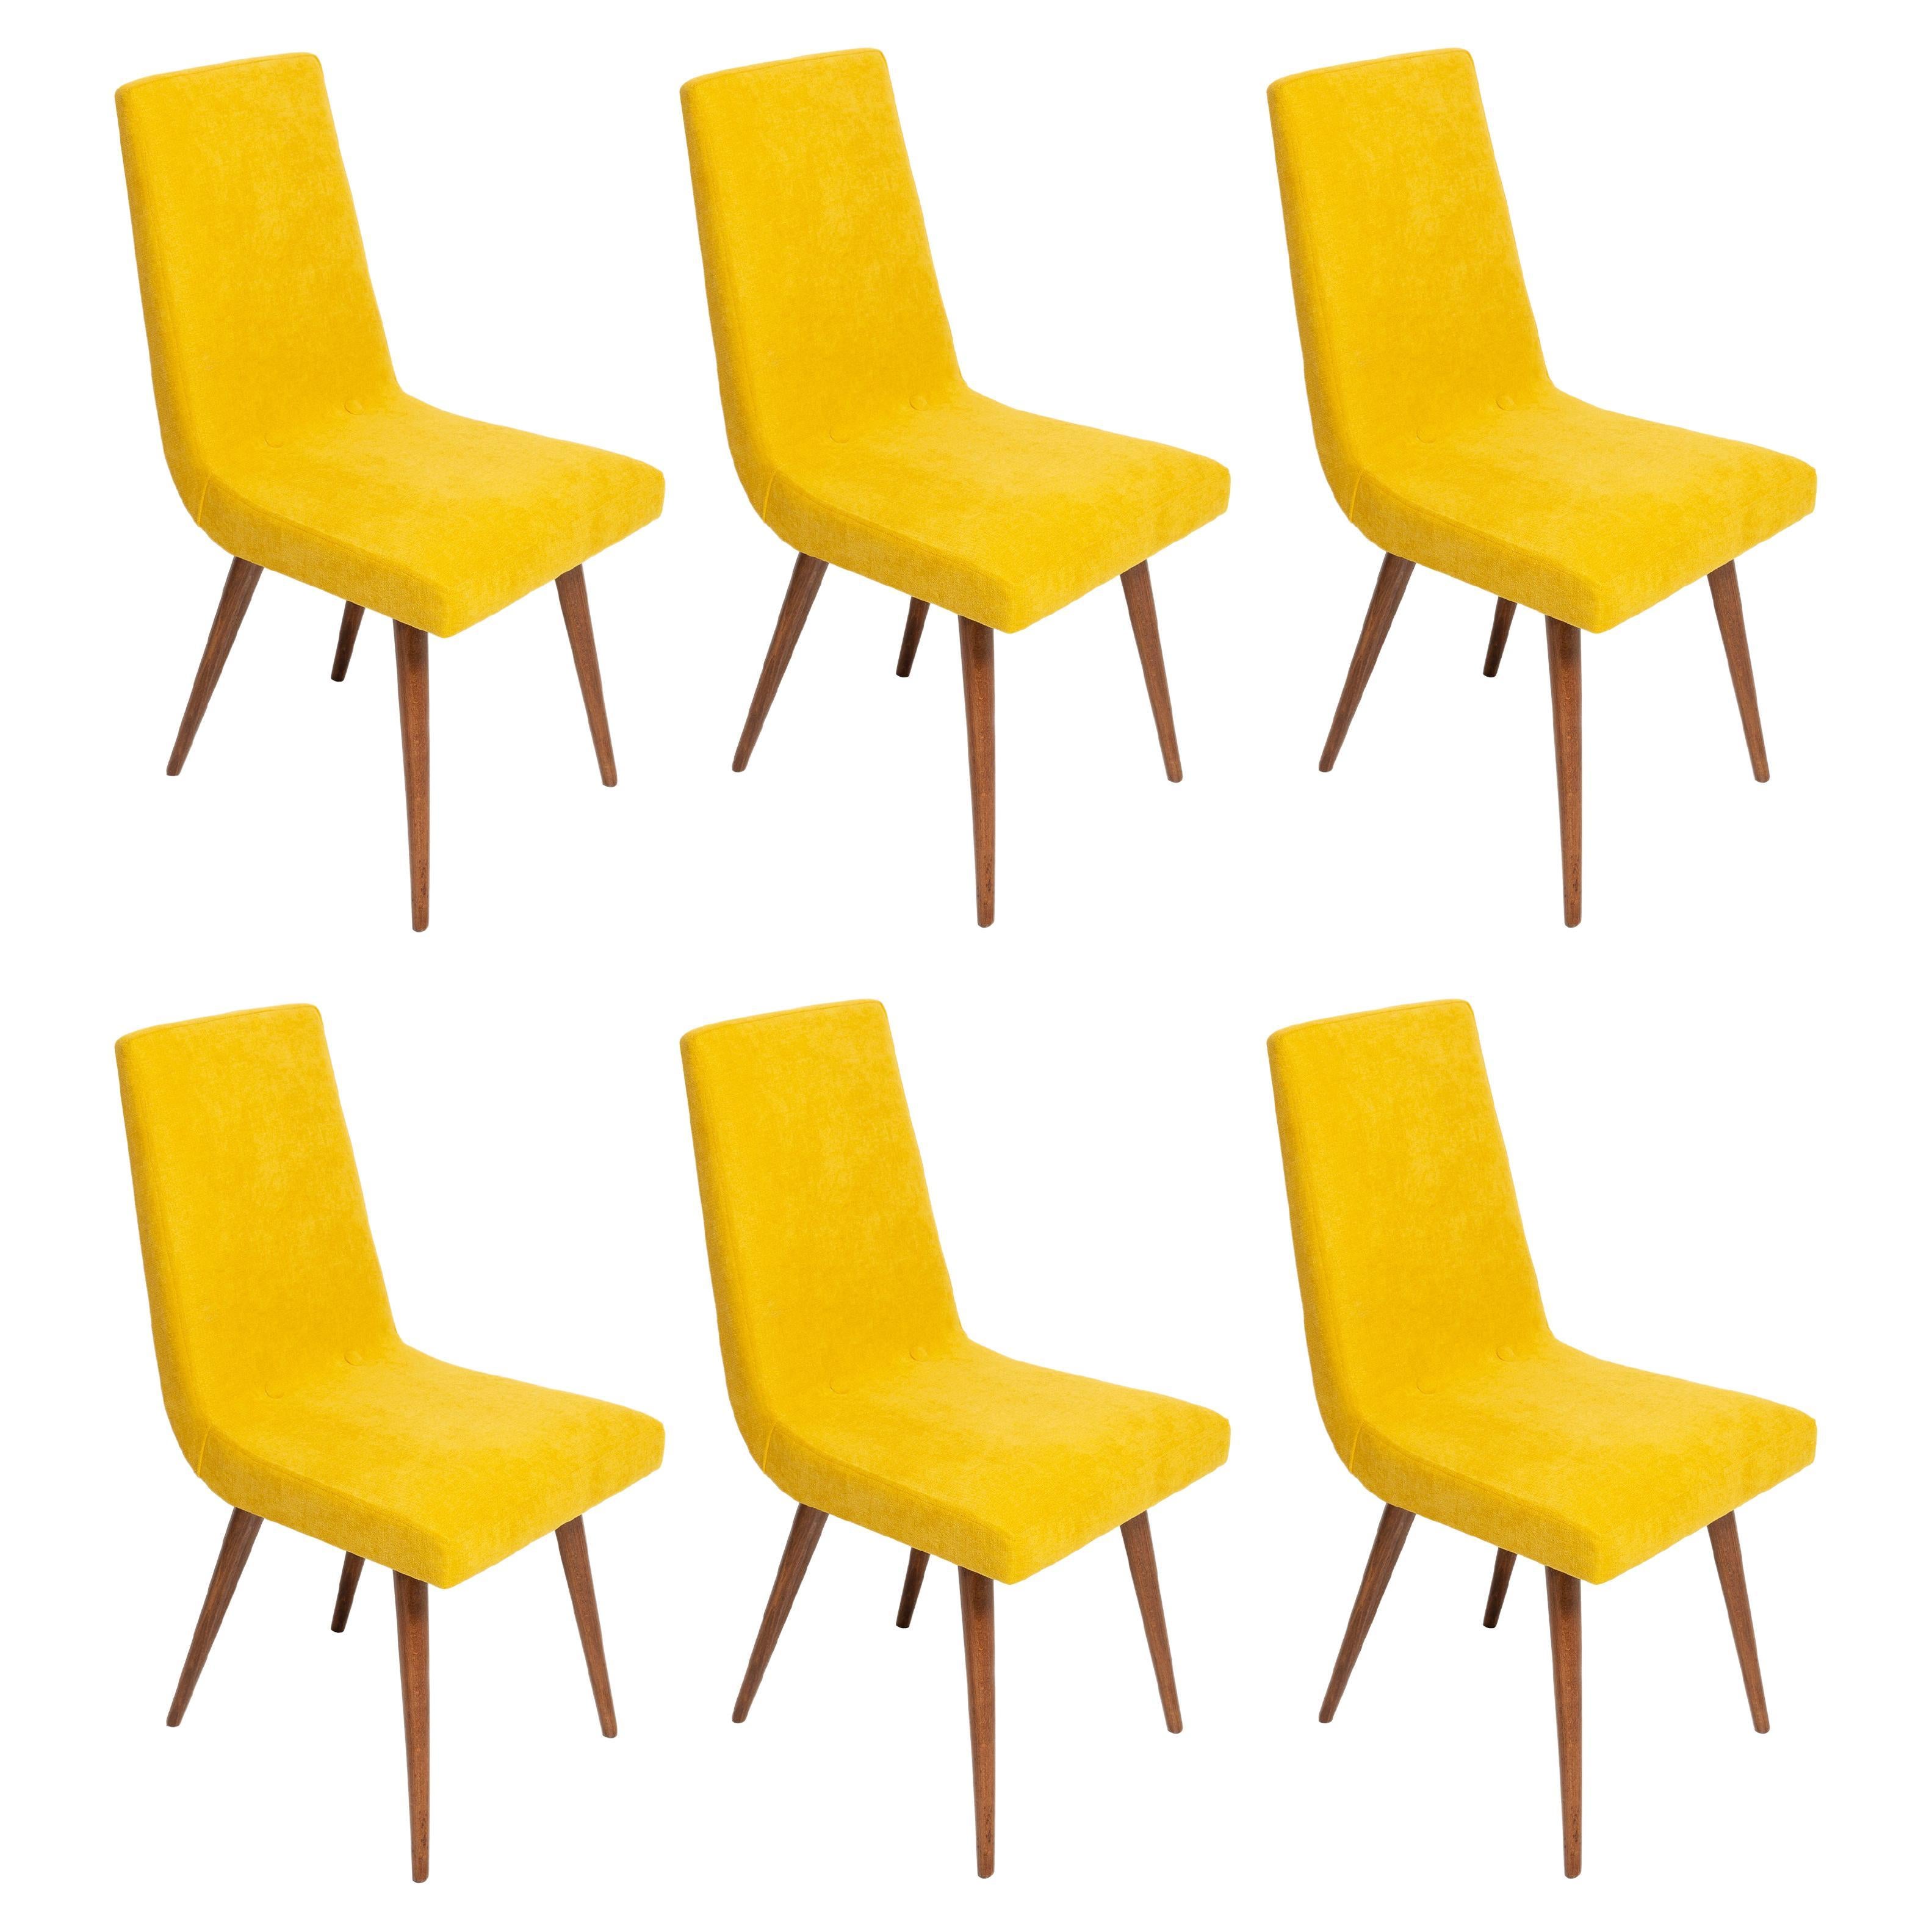 Six 20th Century Mustard Yellow Wool Chair, Rajmund Halas Europe, 1960s For Sale